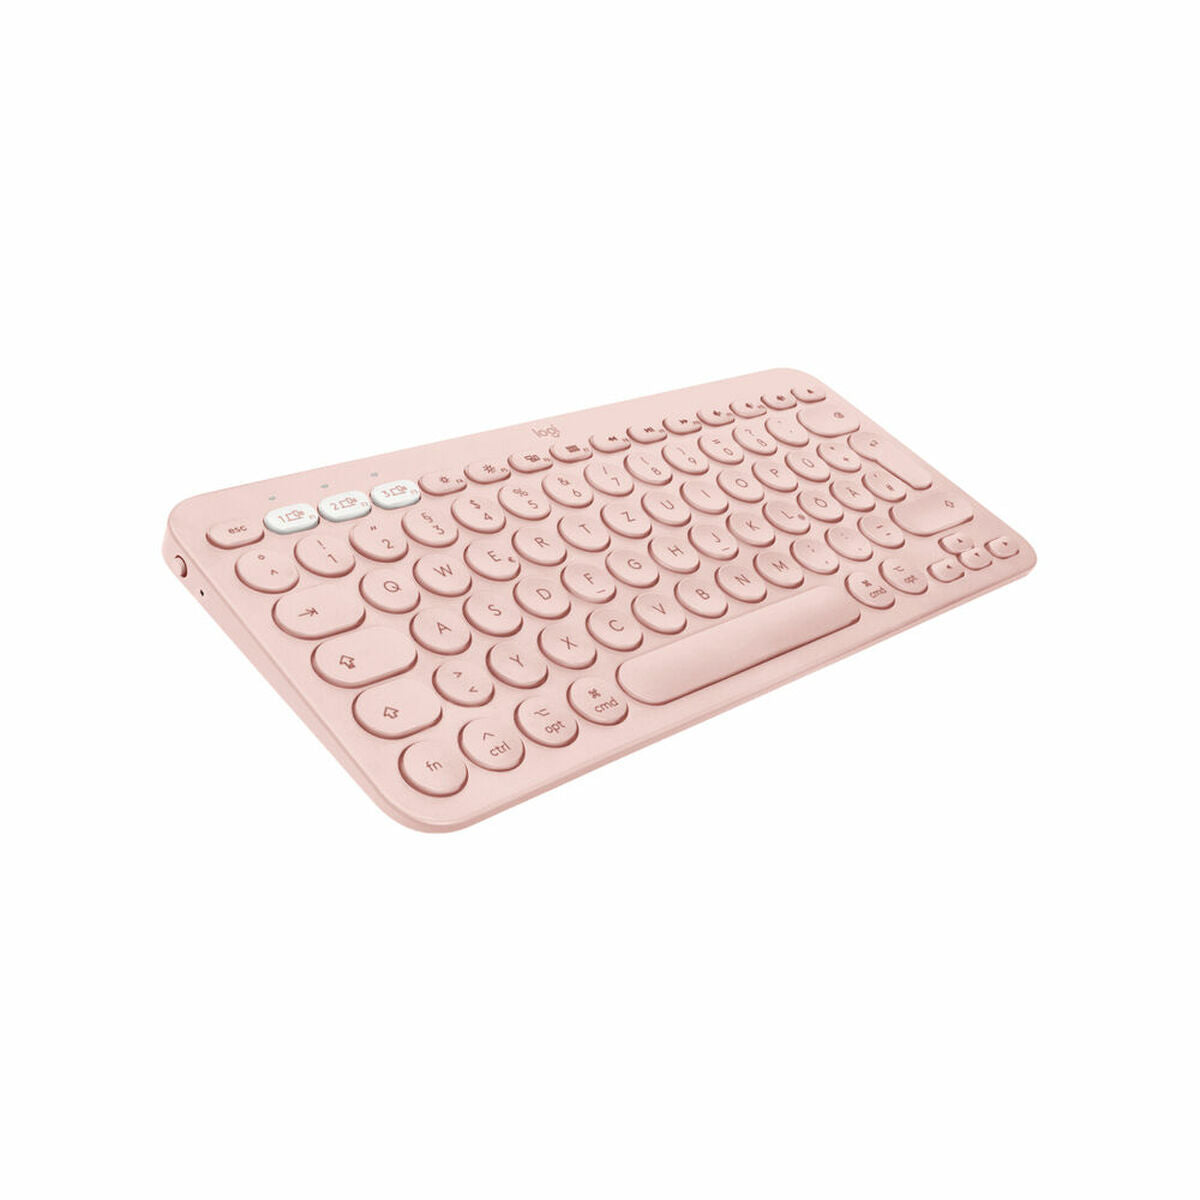 Tastatur Logitech 920-010400 Spanisch Pink Spanisch Qwerty QWERTY